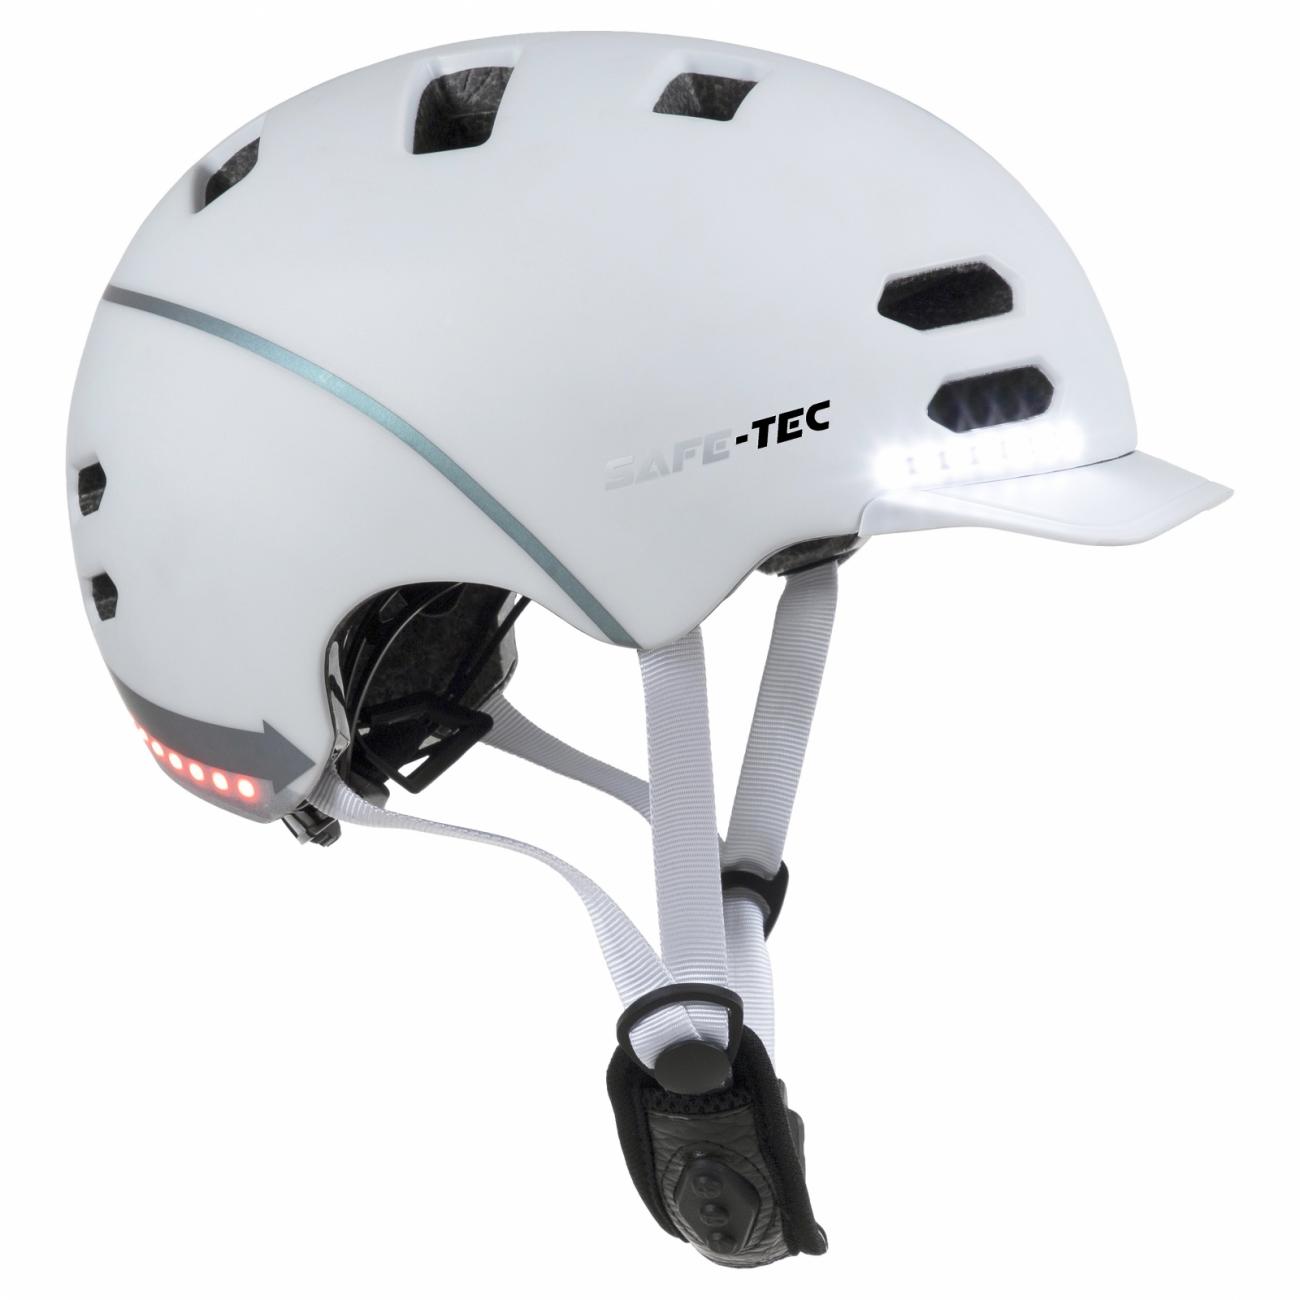 E-shop Safe-Tec SK8 White S (53cm - 55cm)